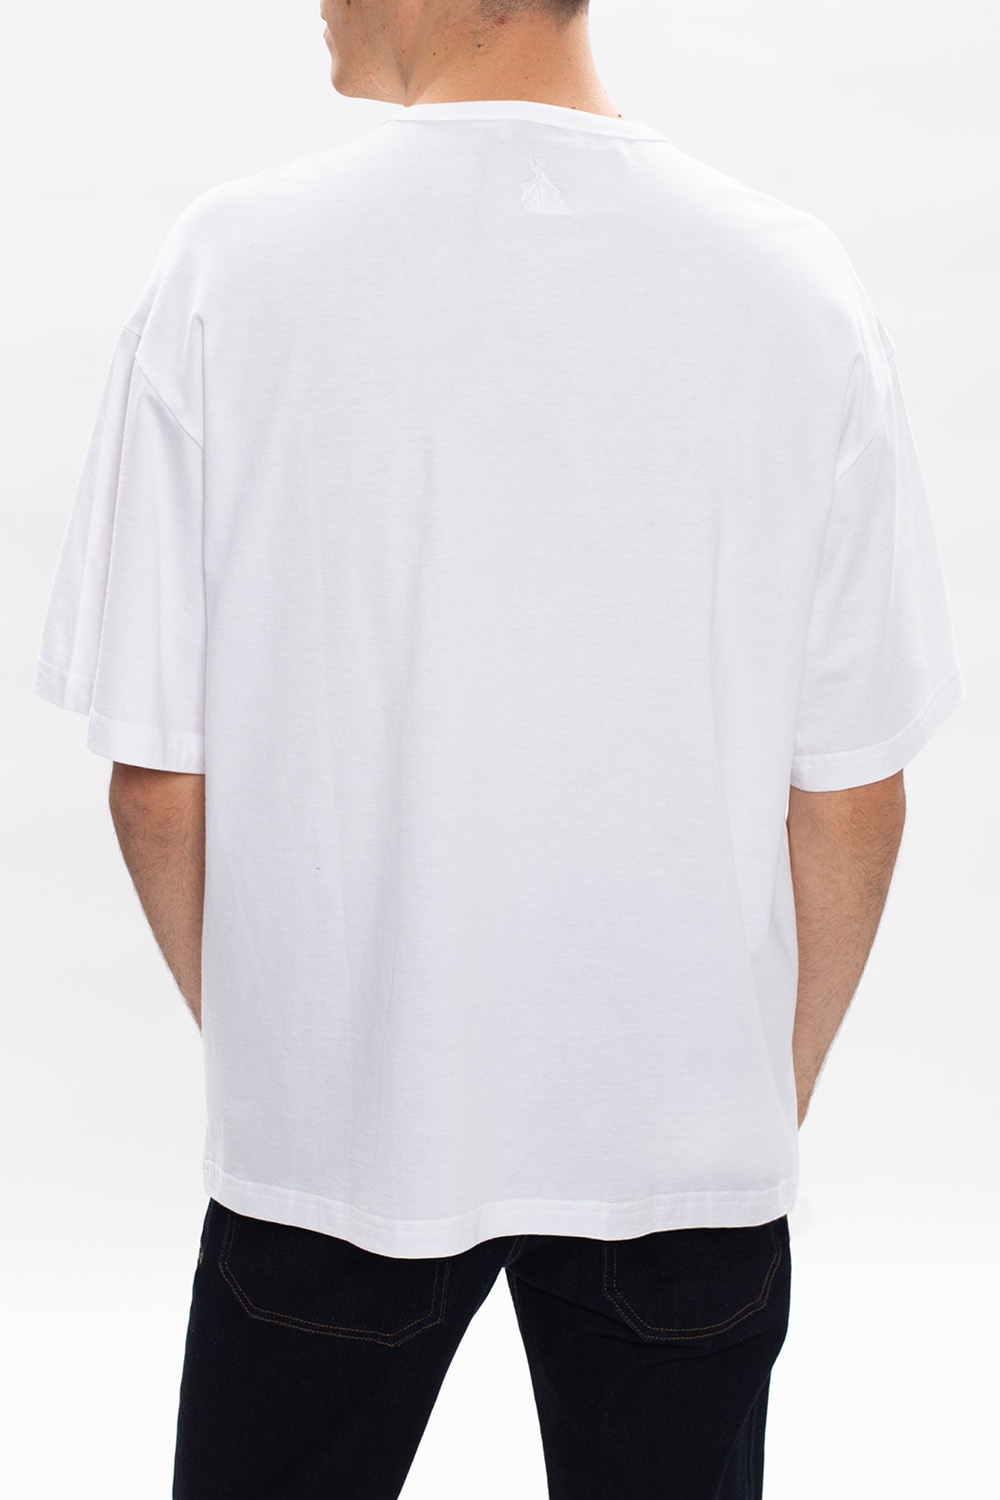 Lanvin Oversize T-shirt